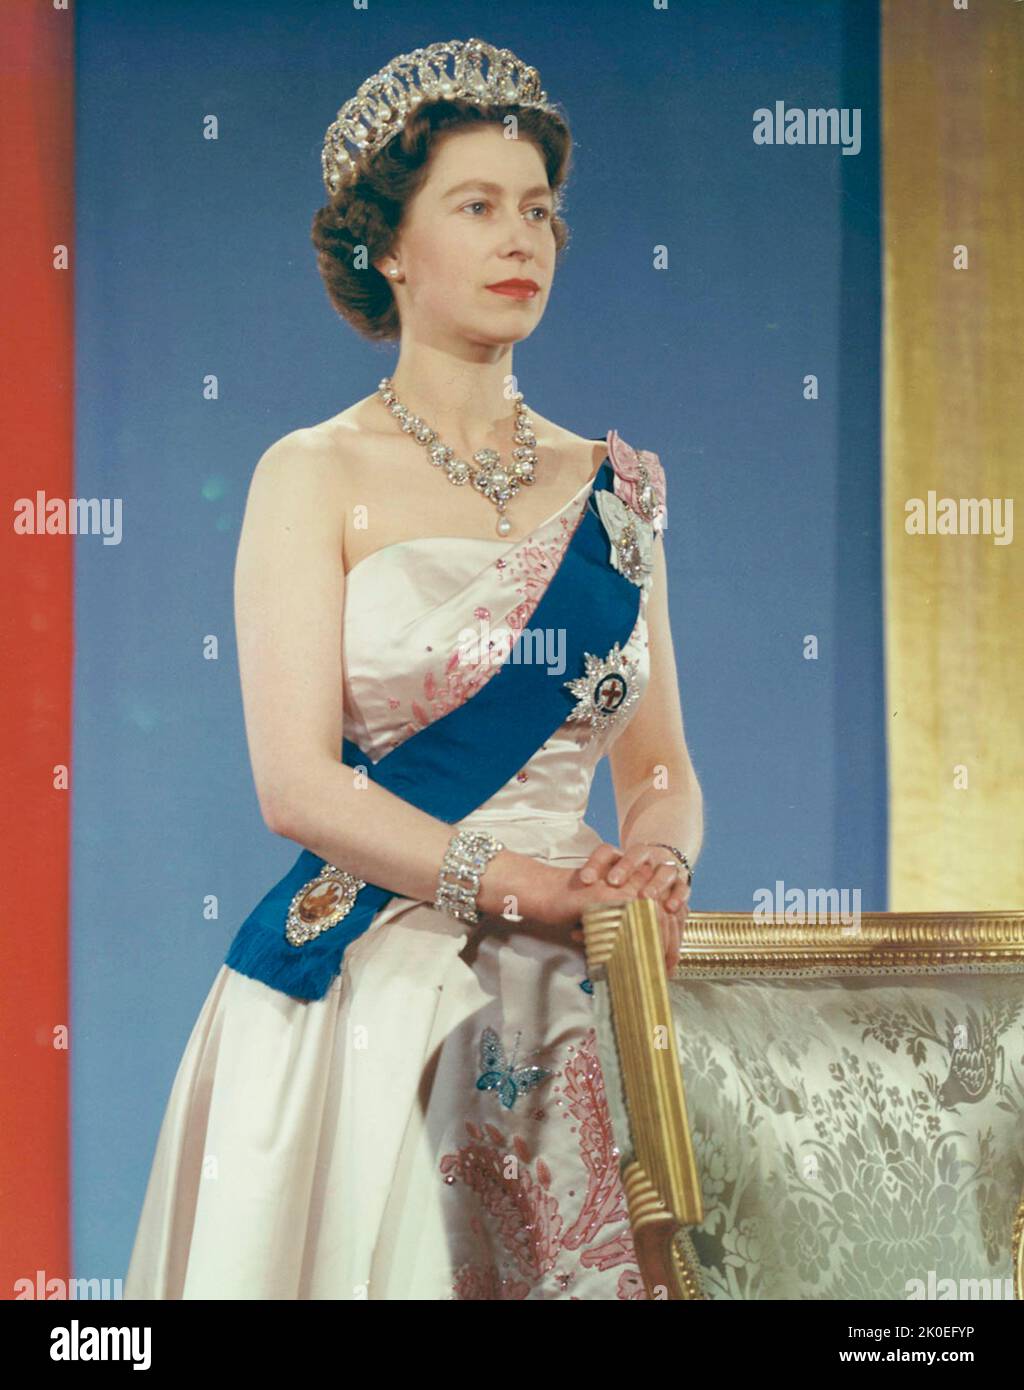 Queen Elizabeth II - 1959 - Offizielles Porträt Stockfoto